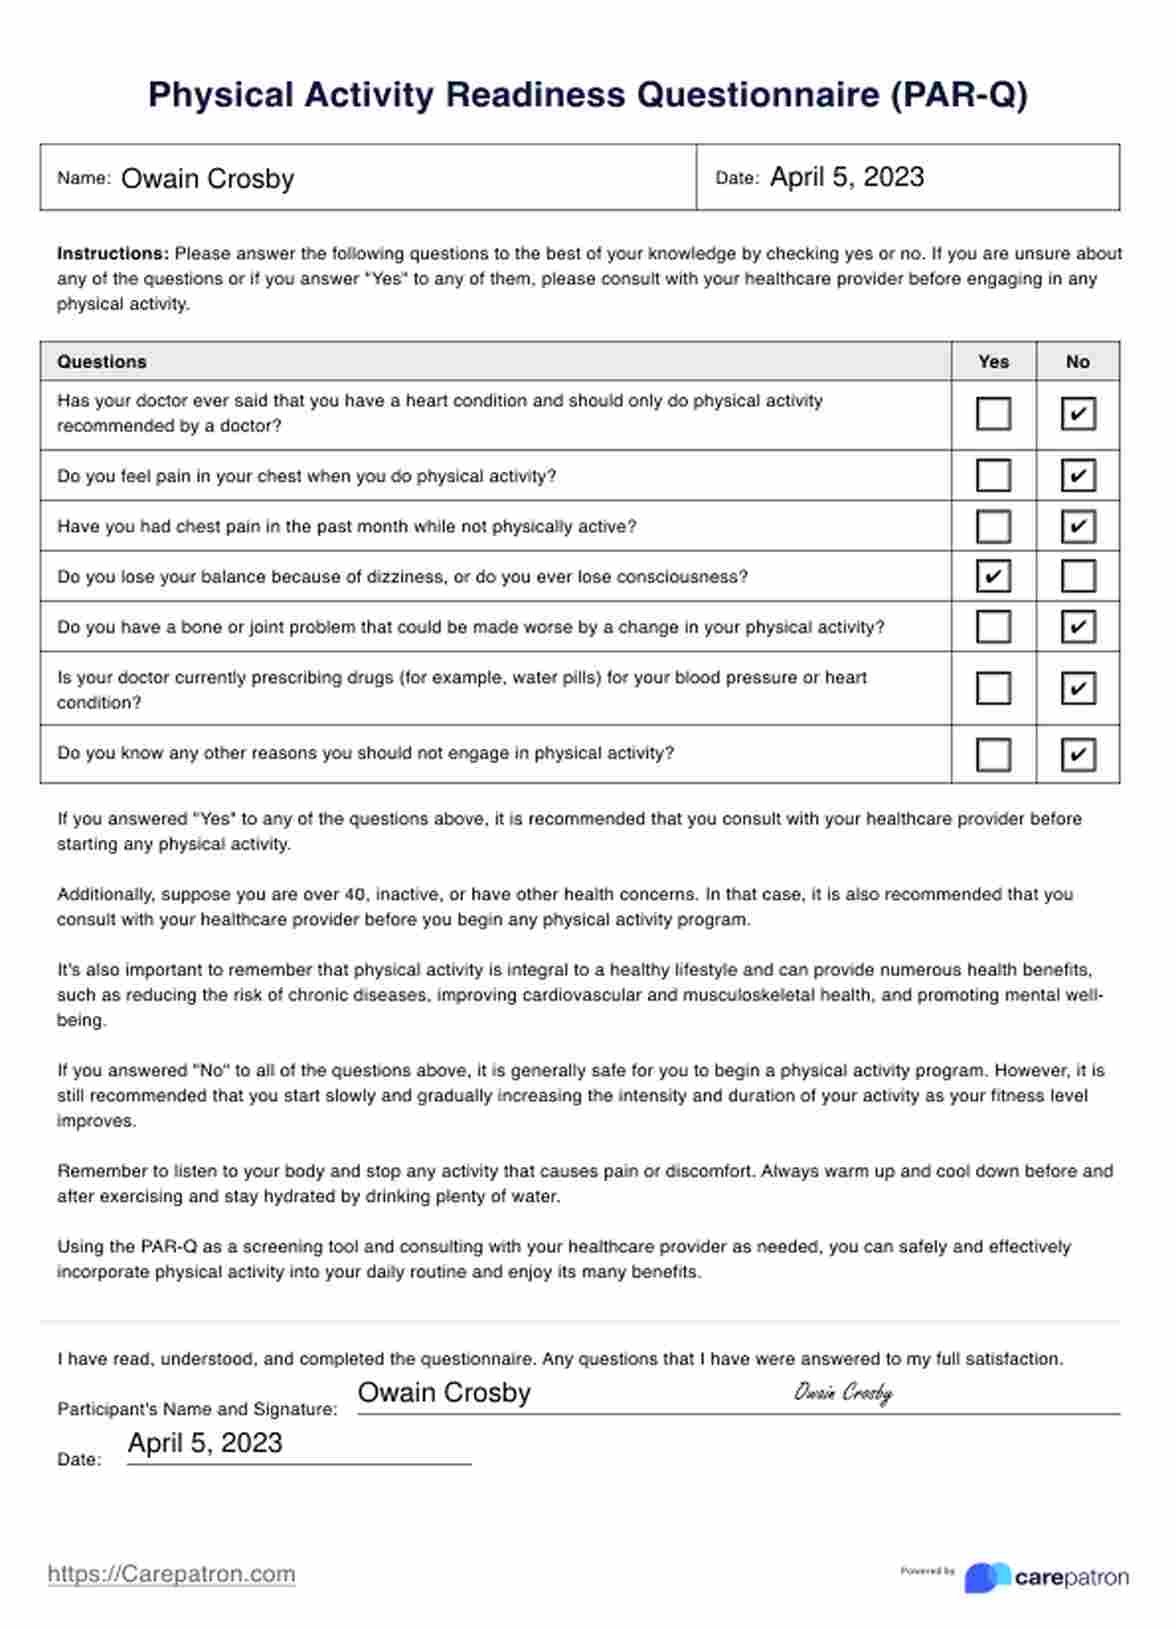 Physical Activity Readiness Questionnaire (PAR-Q) PDF Example